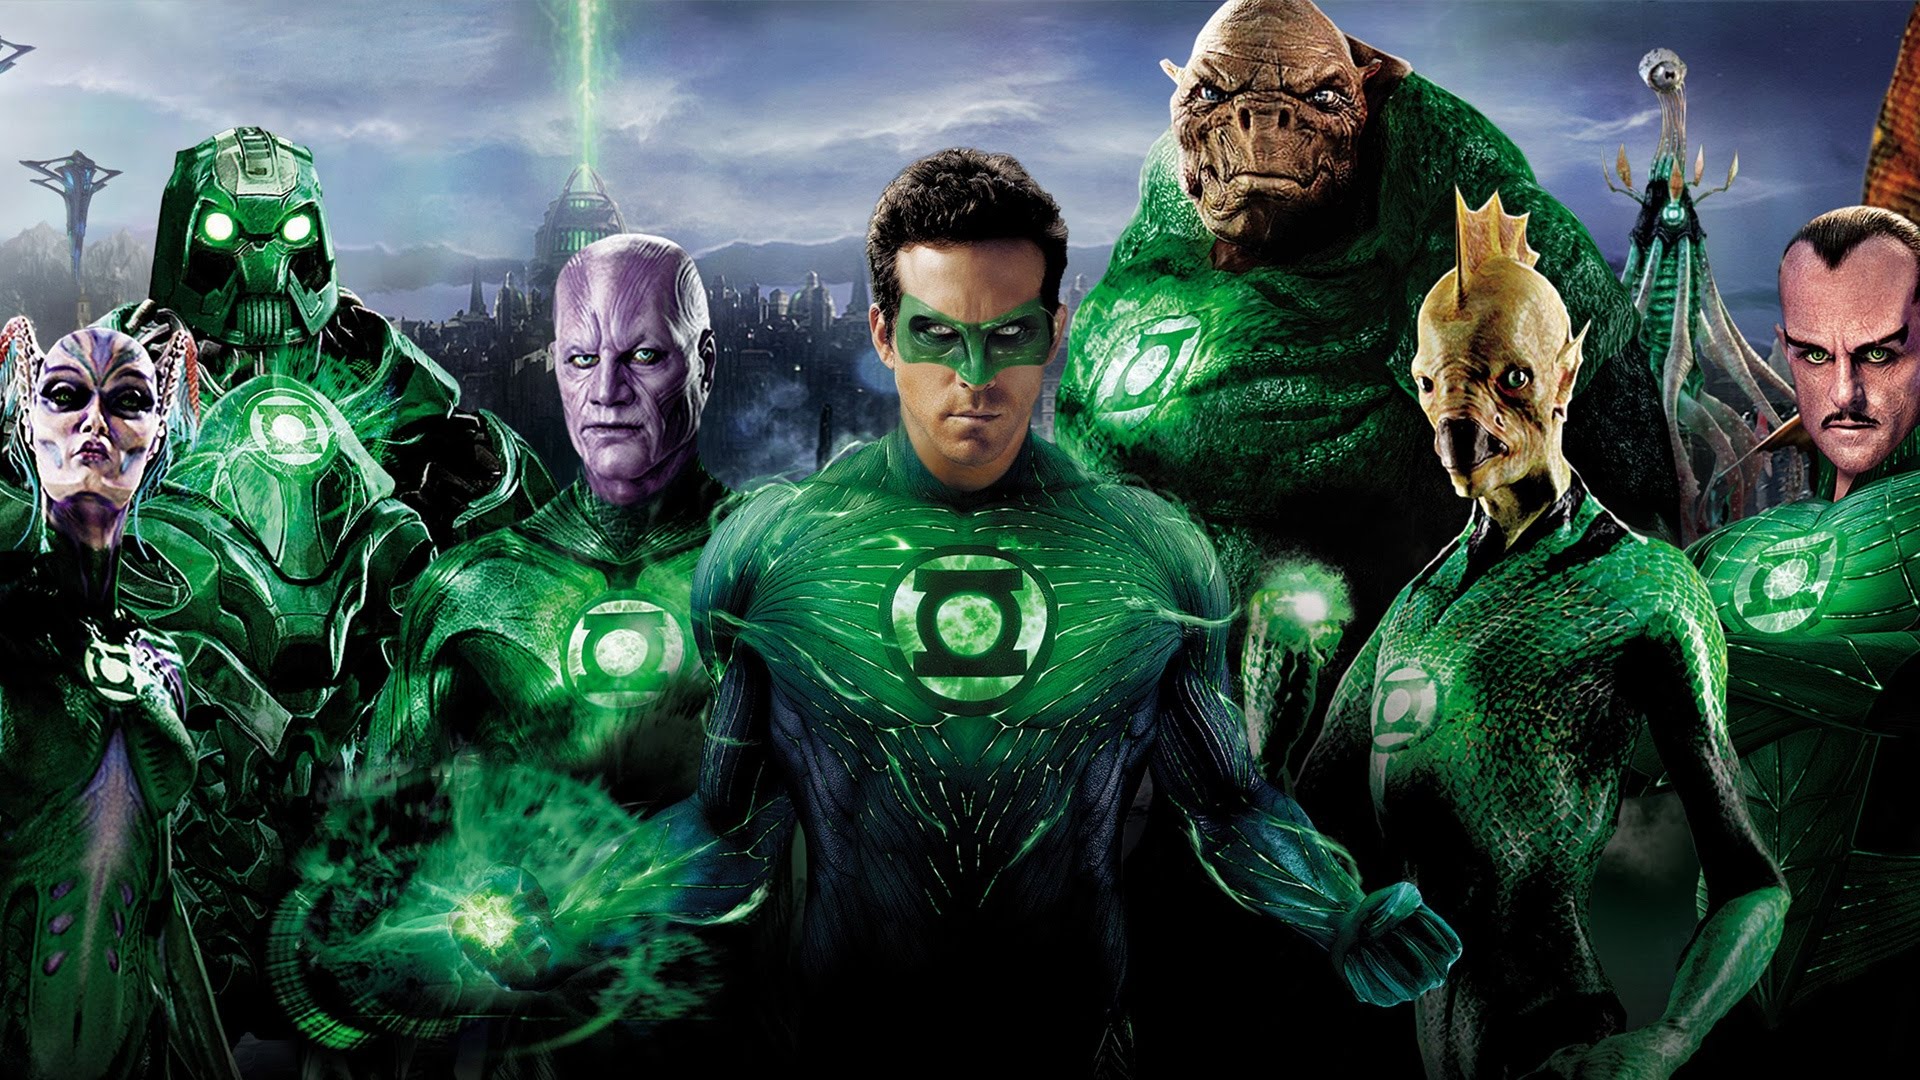 Berbat Bir Çizgi Roman Uyarlaması: Green Lantern 1 –